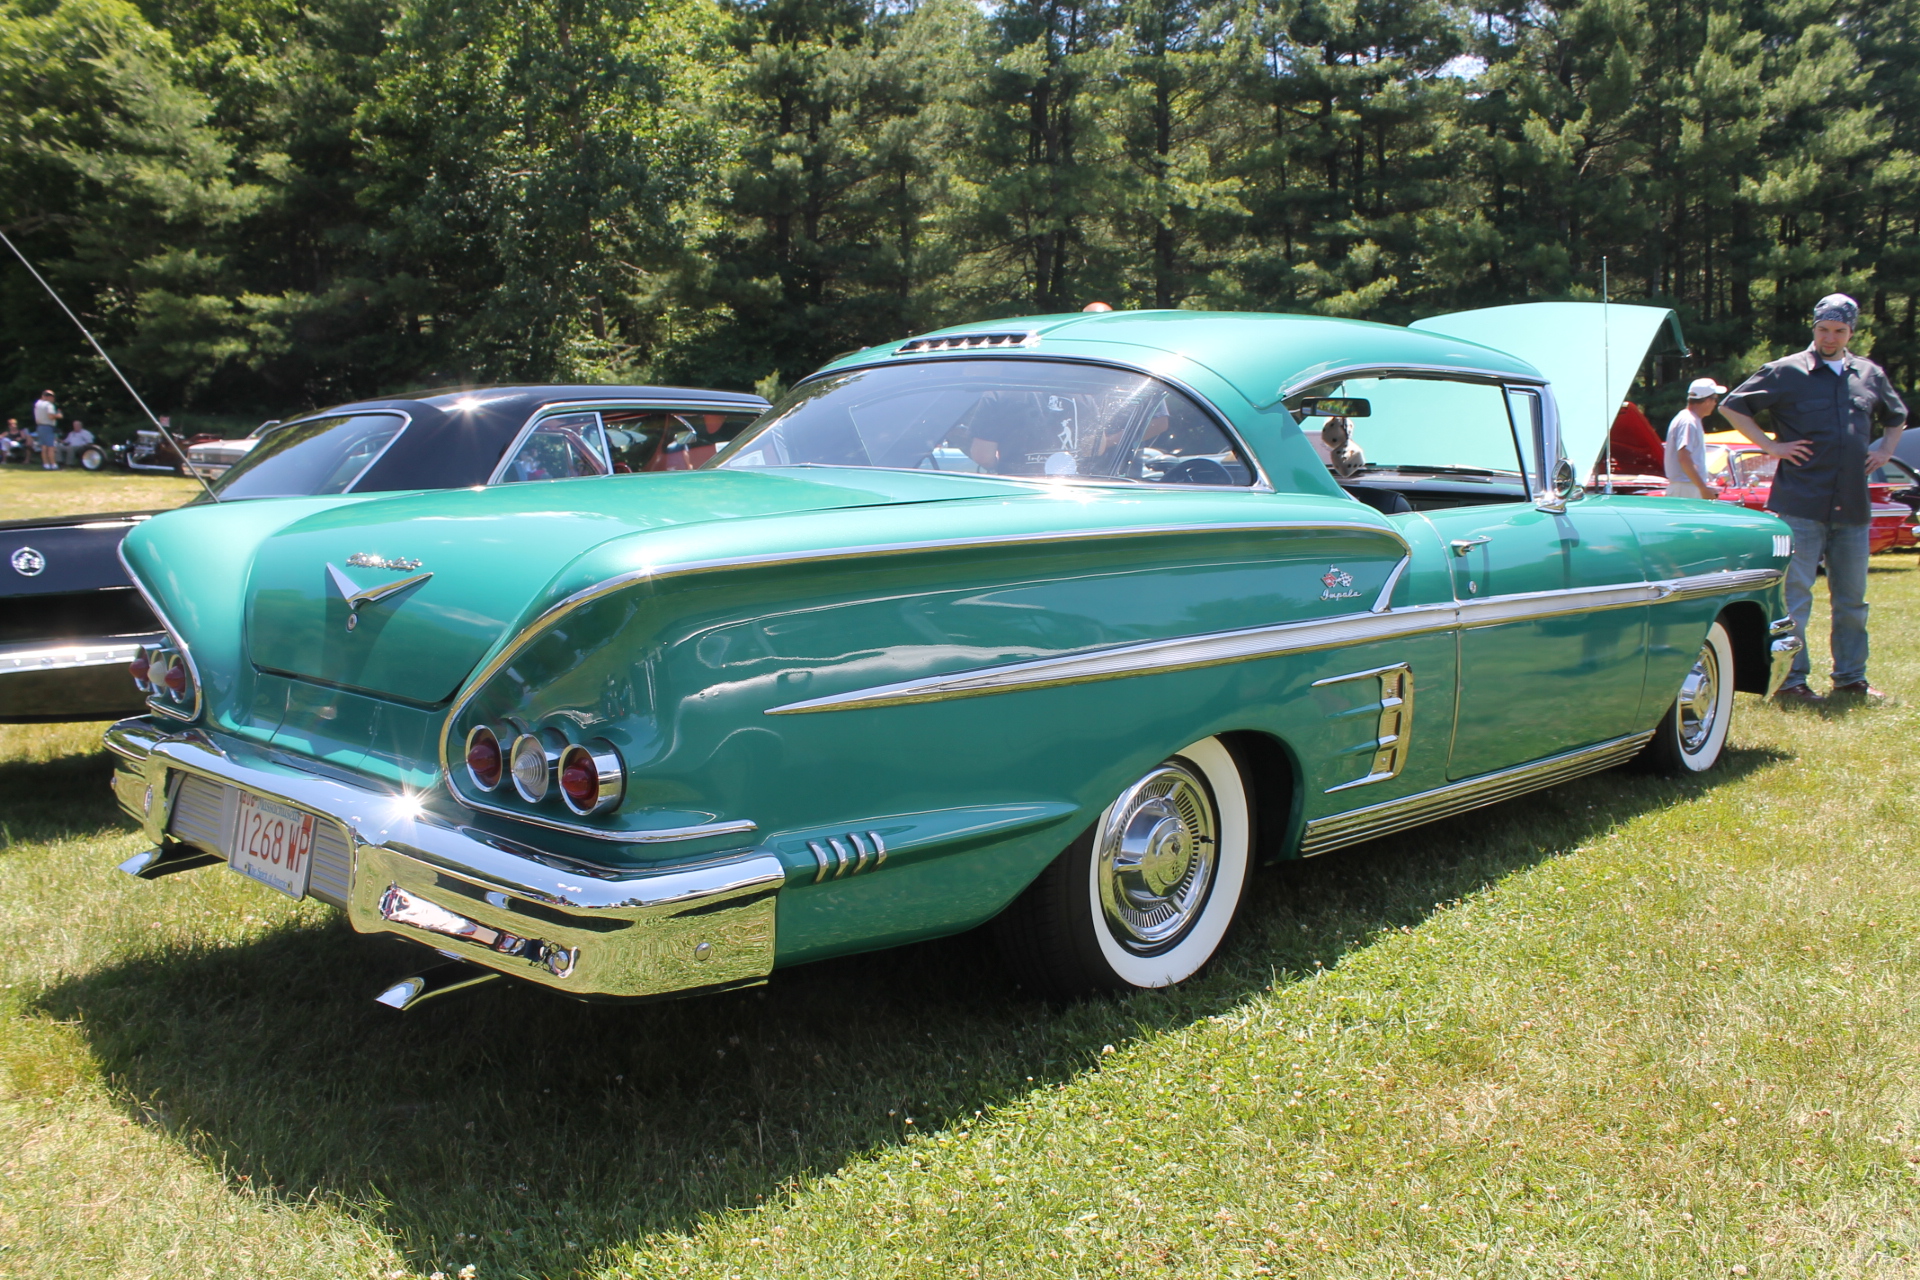 Amazing 1958 Chevrolet Impala Pictures & Backgrounds